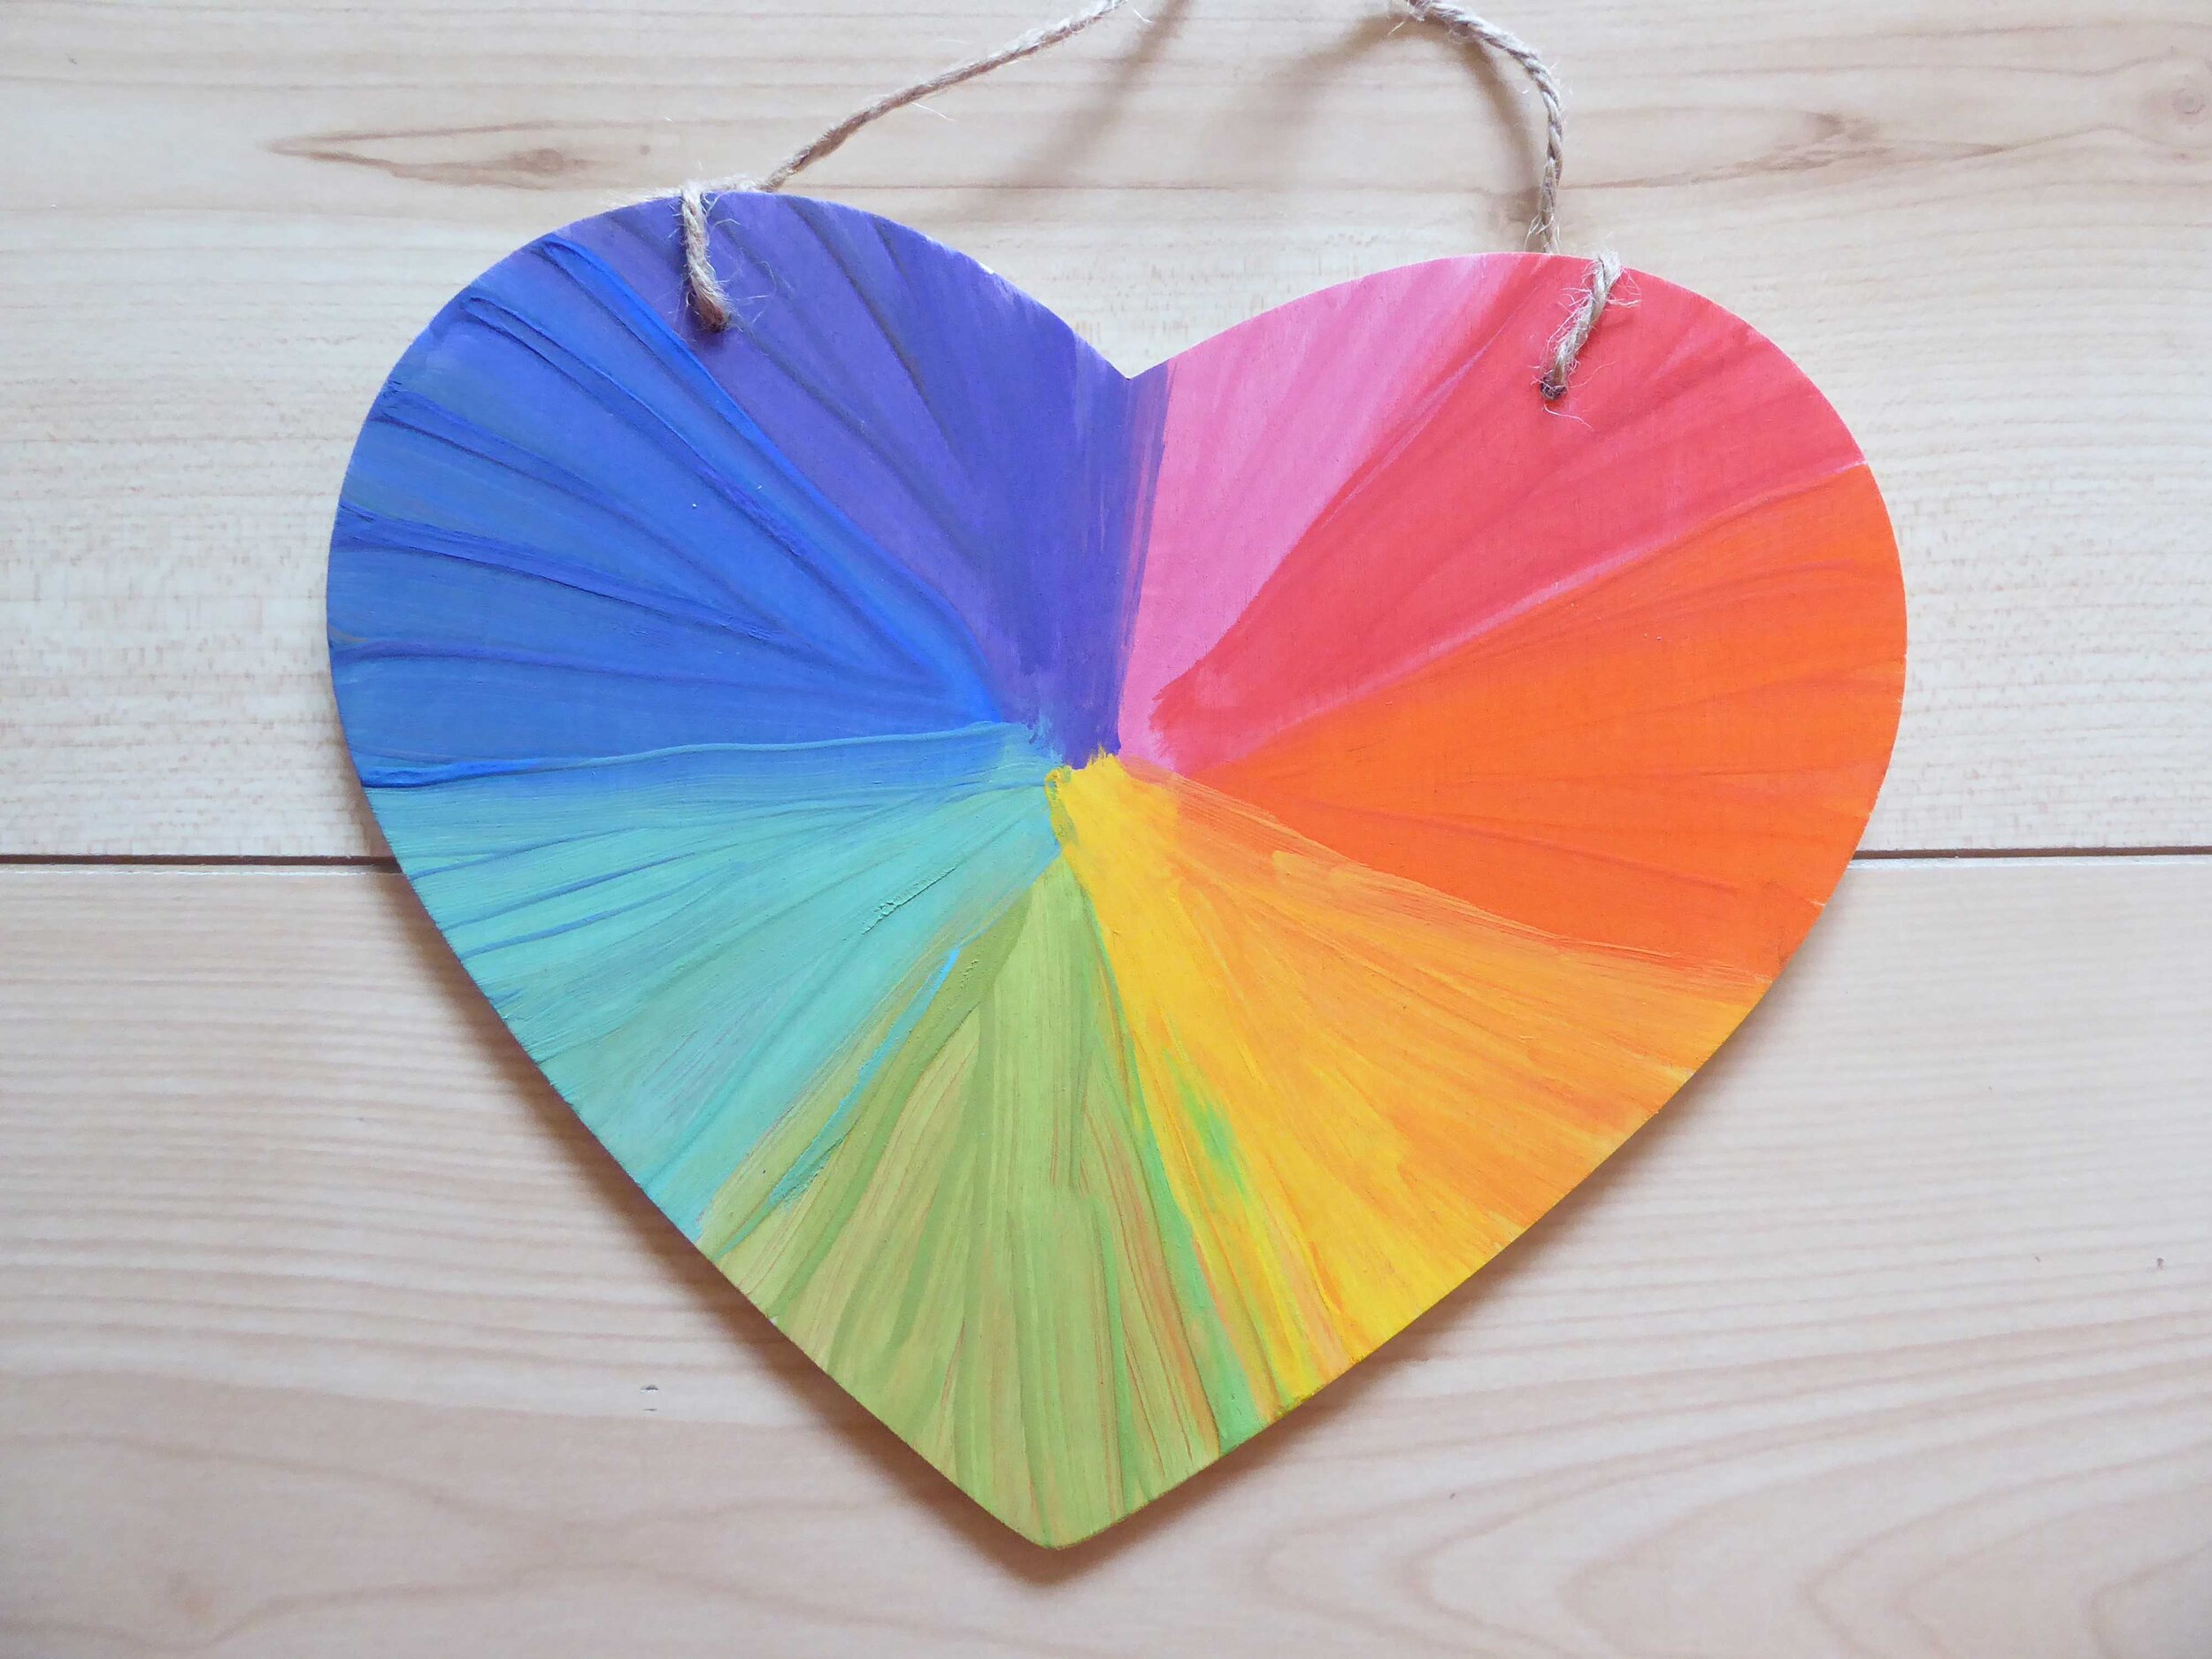 Rainbow Heart by Lauren Sclater aged 11